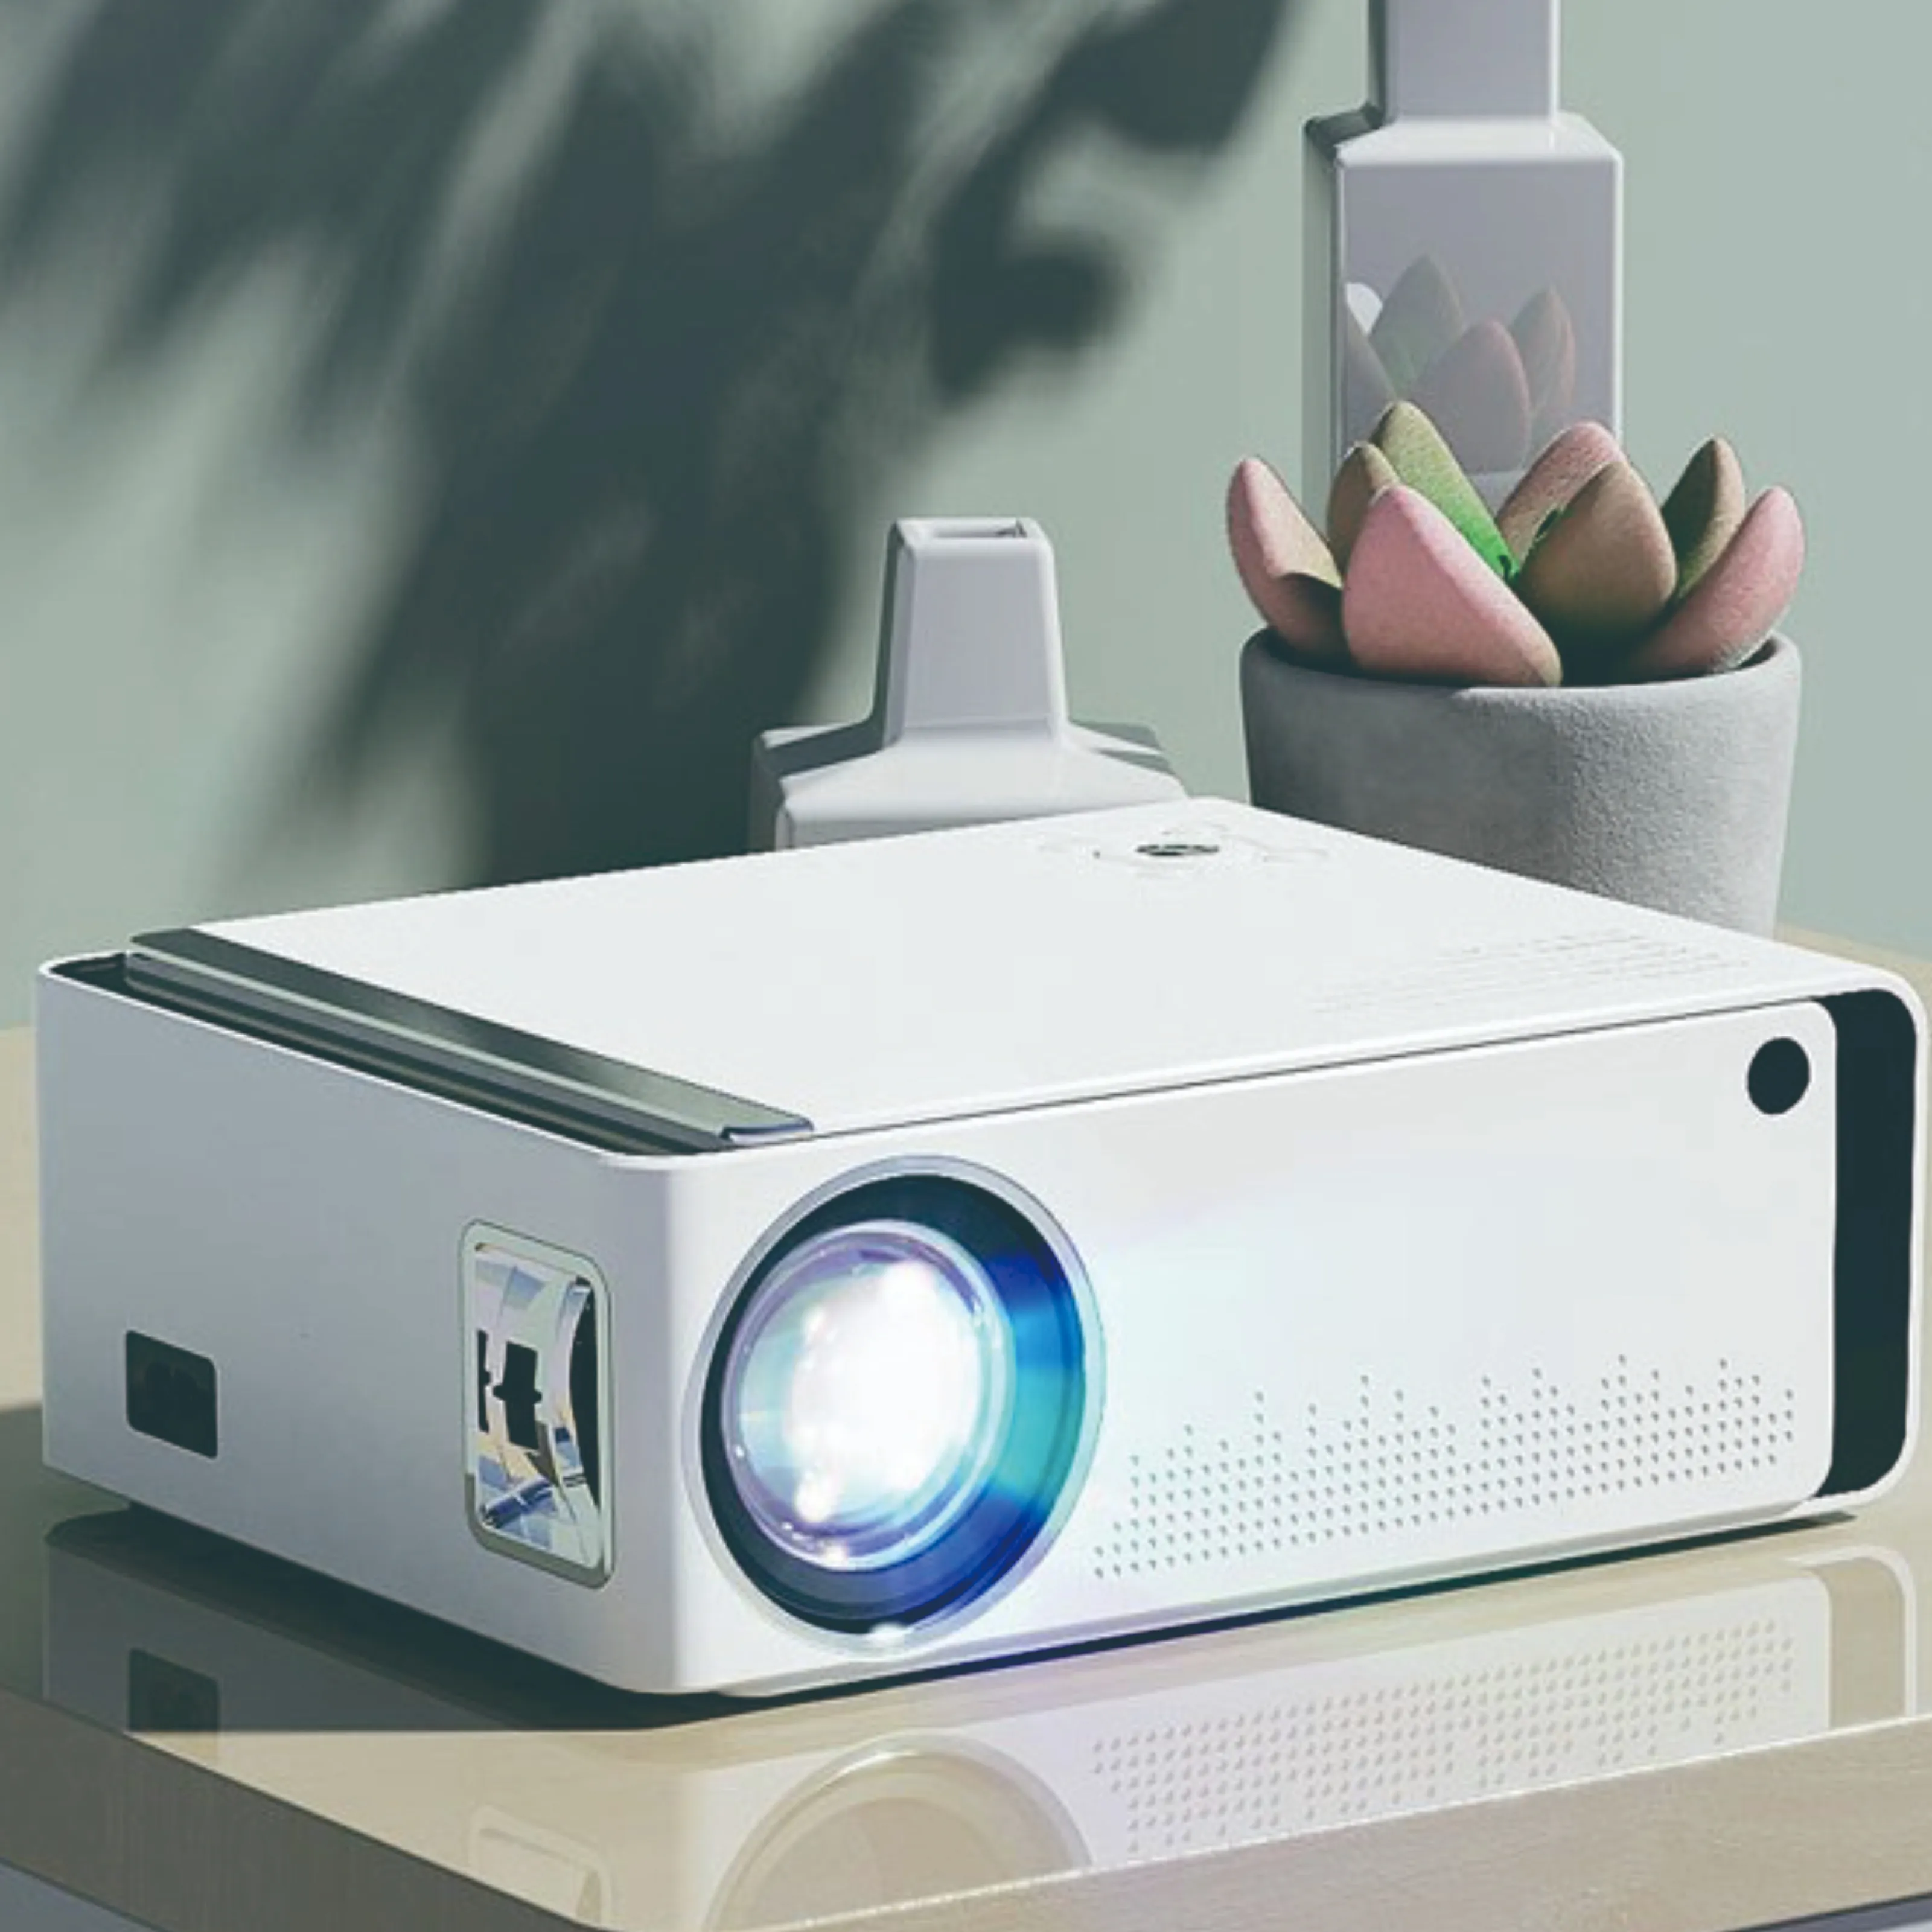 Projetor de led smart, venda quente, projetor de vídeo portátil, lcd, inteligente, mini projetor